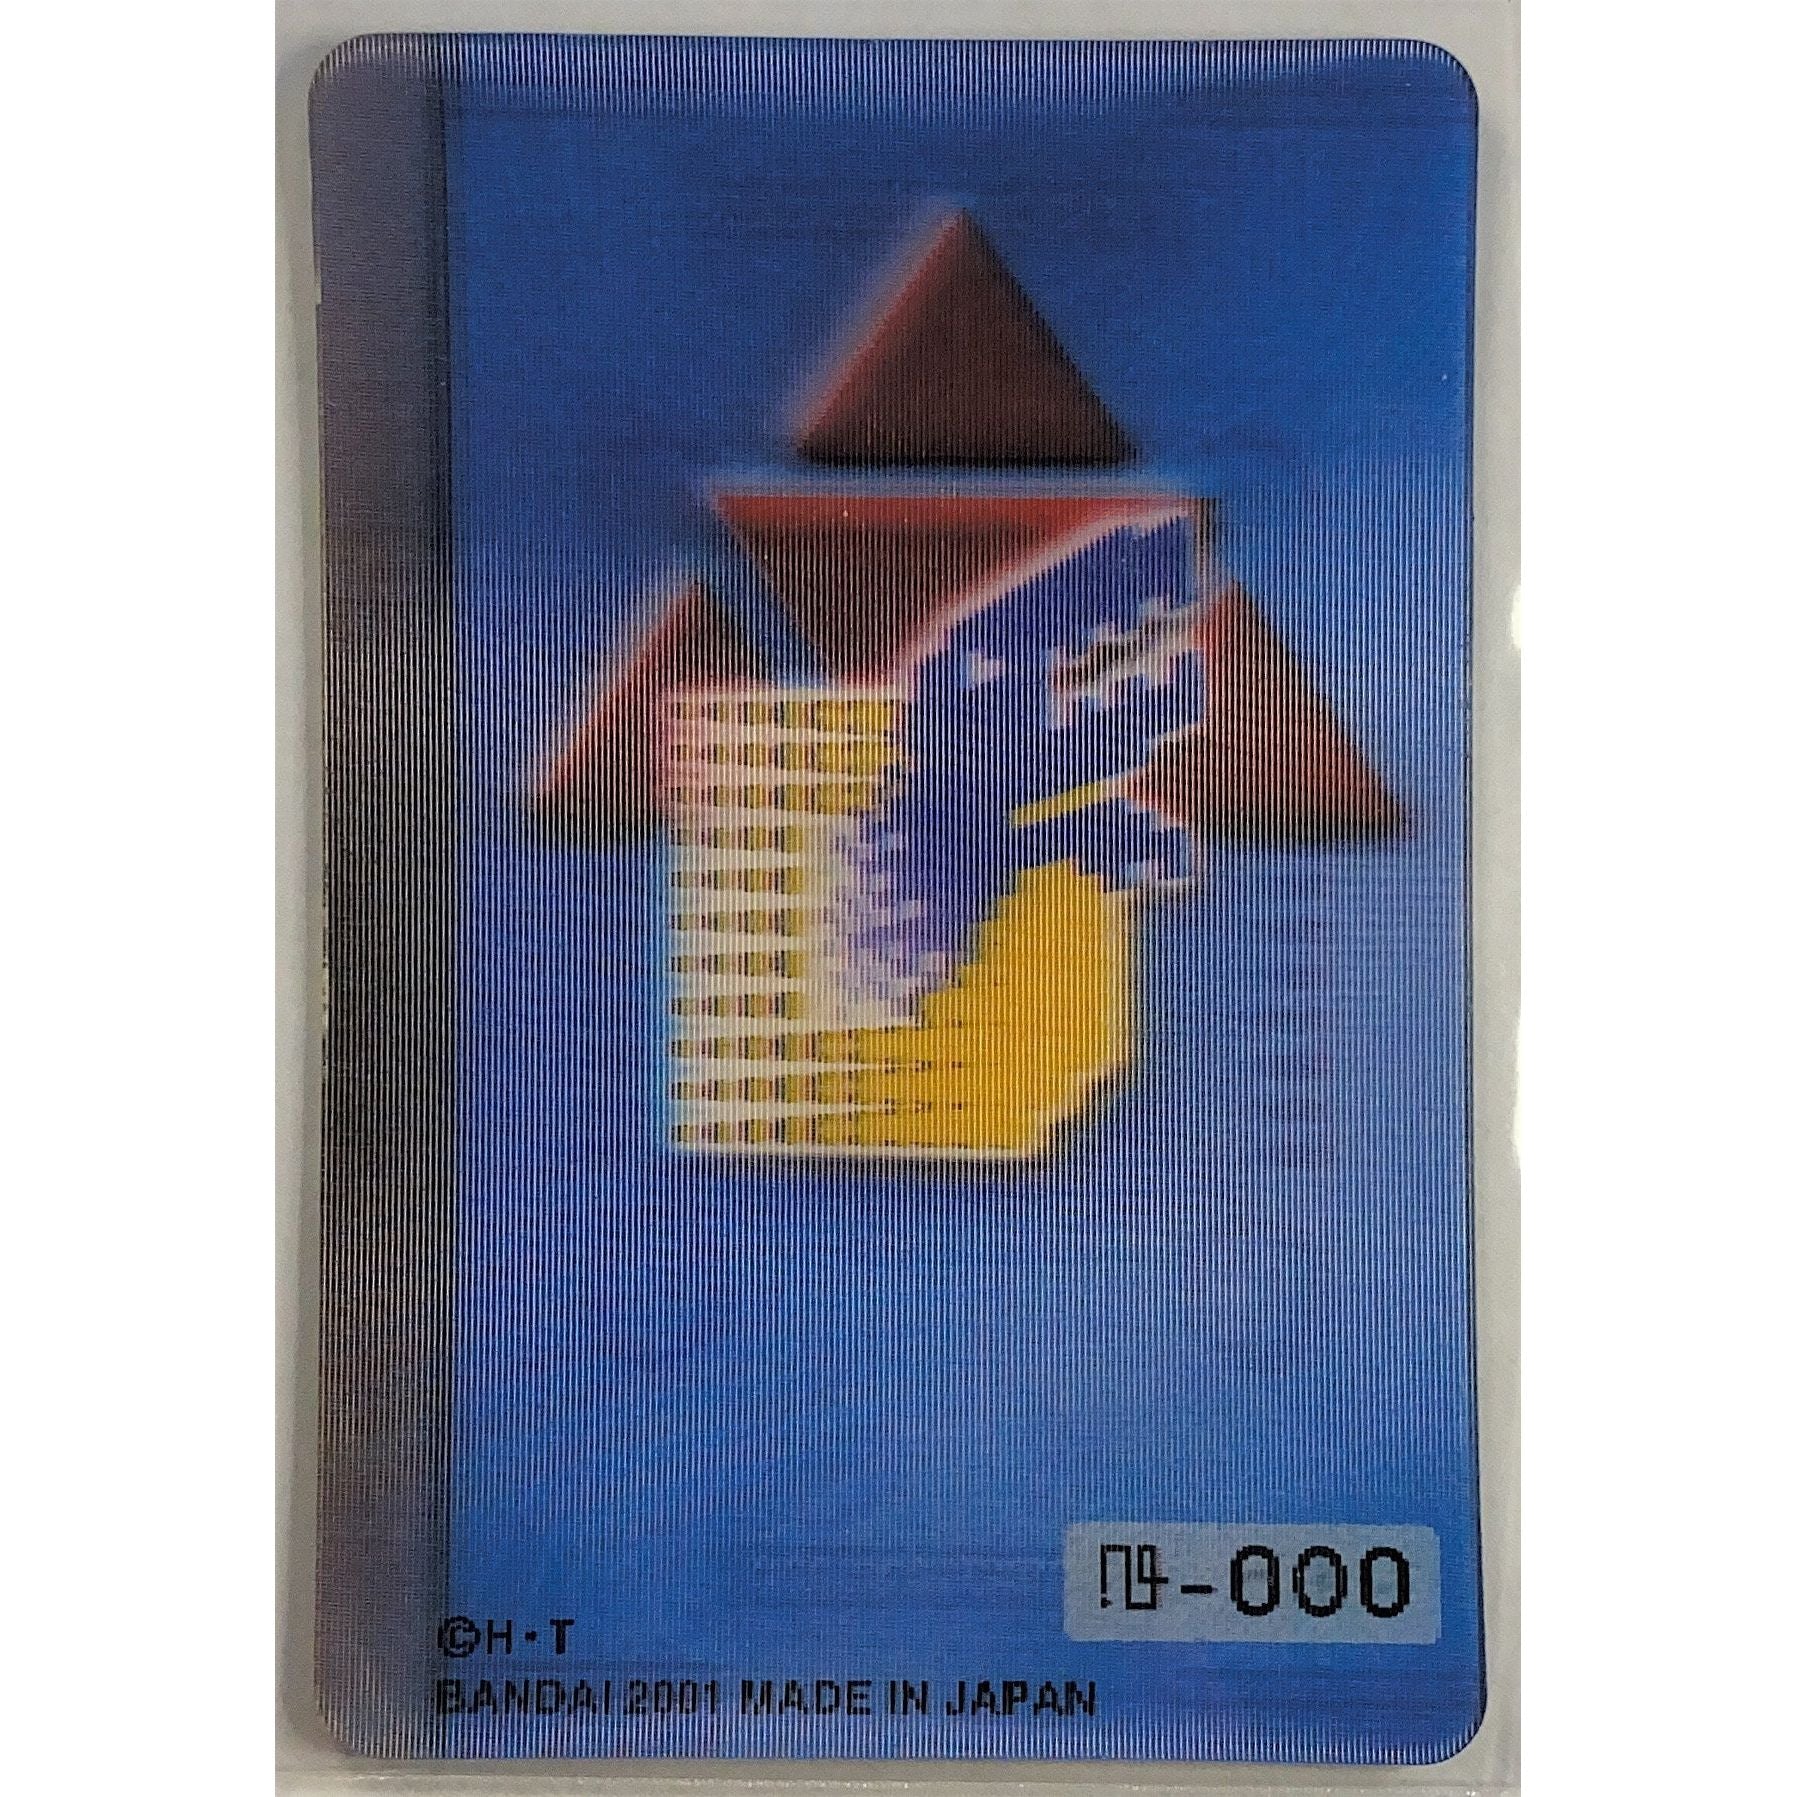  2001 Bandai Digimon Japanese Rare 3D Lenticular Promo Card #000  Local Legends Cards & Collectibles